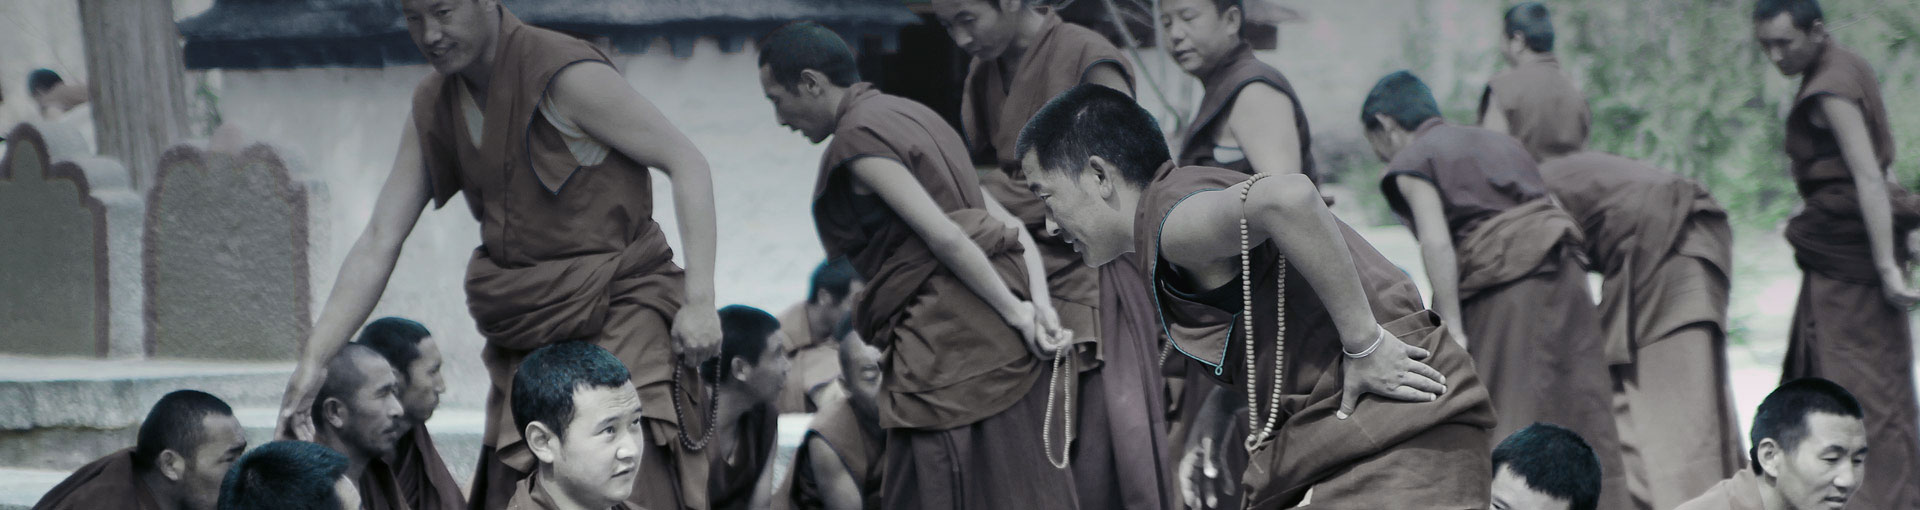 Tibet monks element film